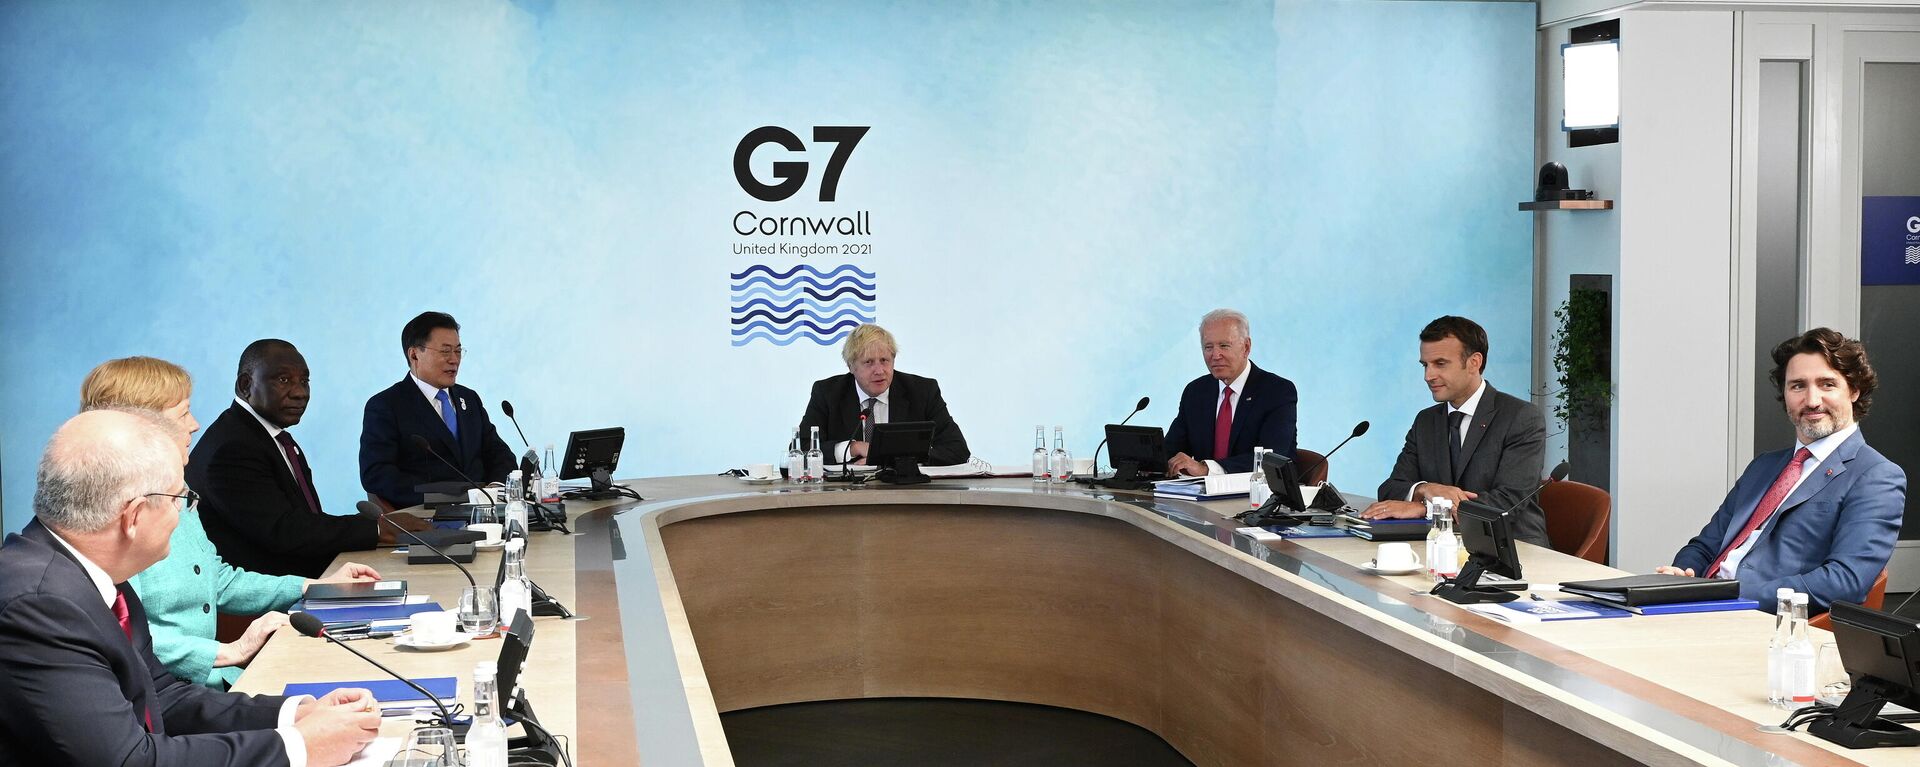 Cumbre del G7 en Cornwall, Reino Unido - Sputnik Mundo, 1920, 14.06.2021